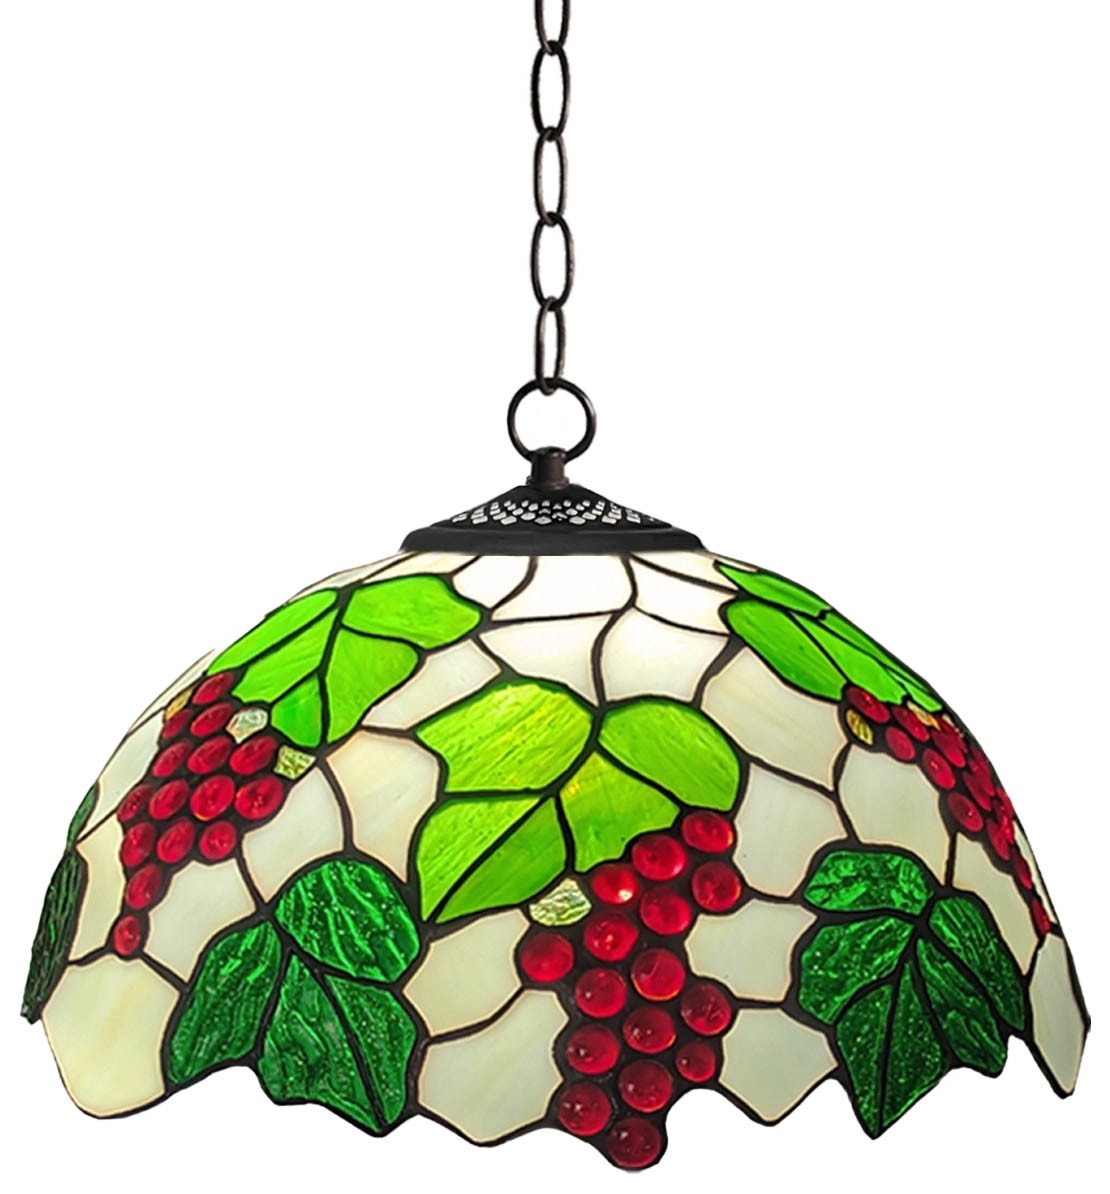 Hanging Grape Pendant Lamp - Shade Dia 41cm